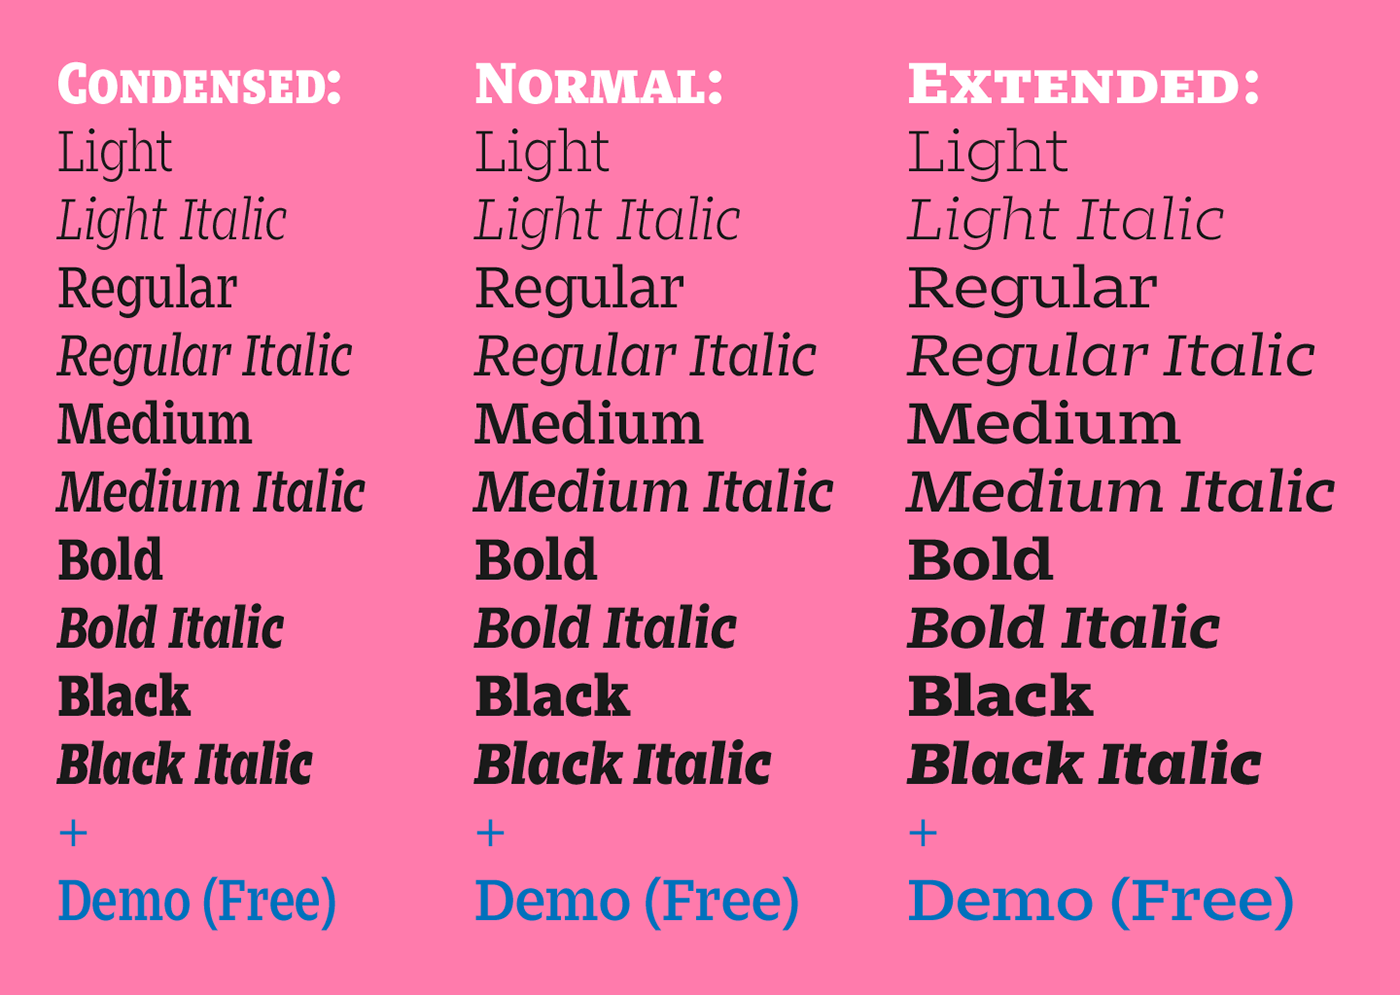 CarnokyType font slab slab-serif free text Layout editorial type design magazine